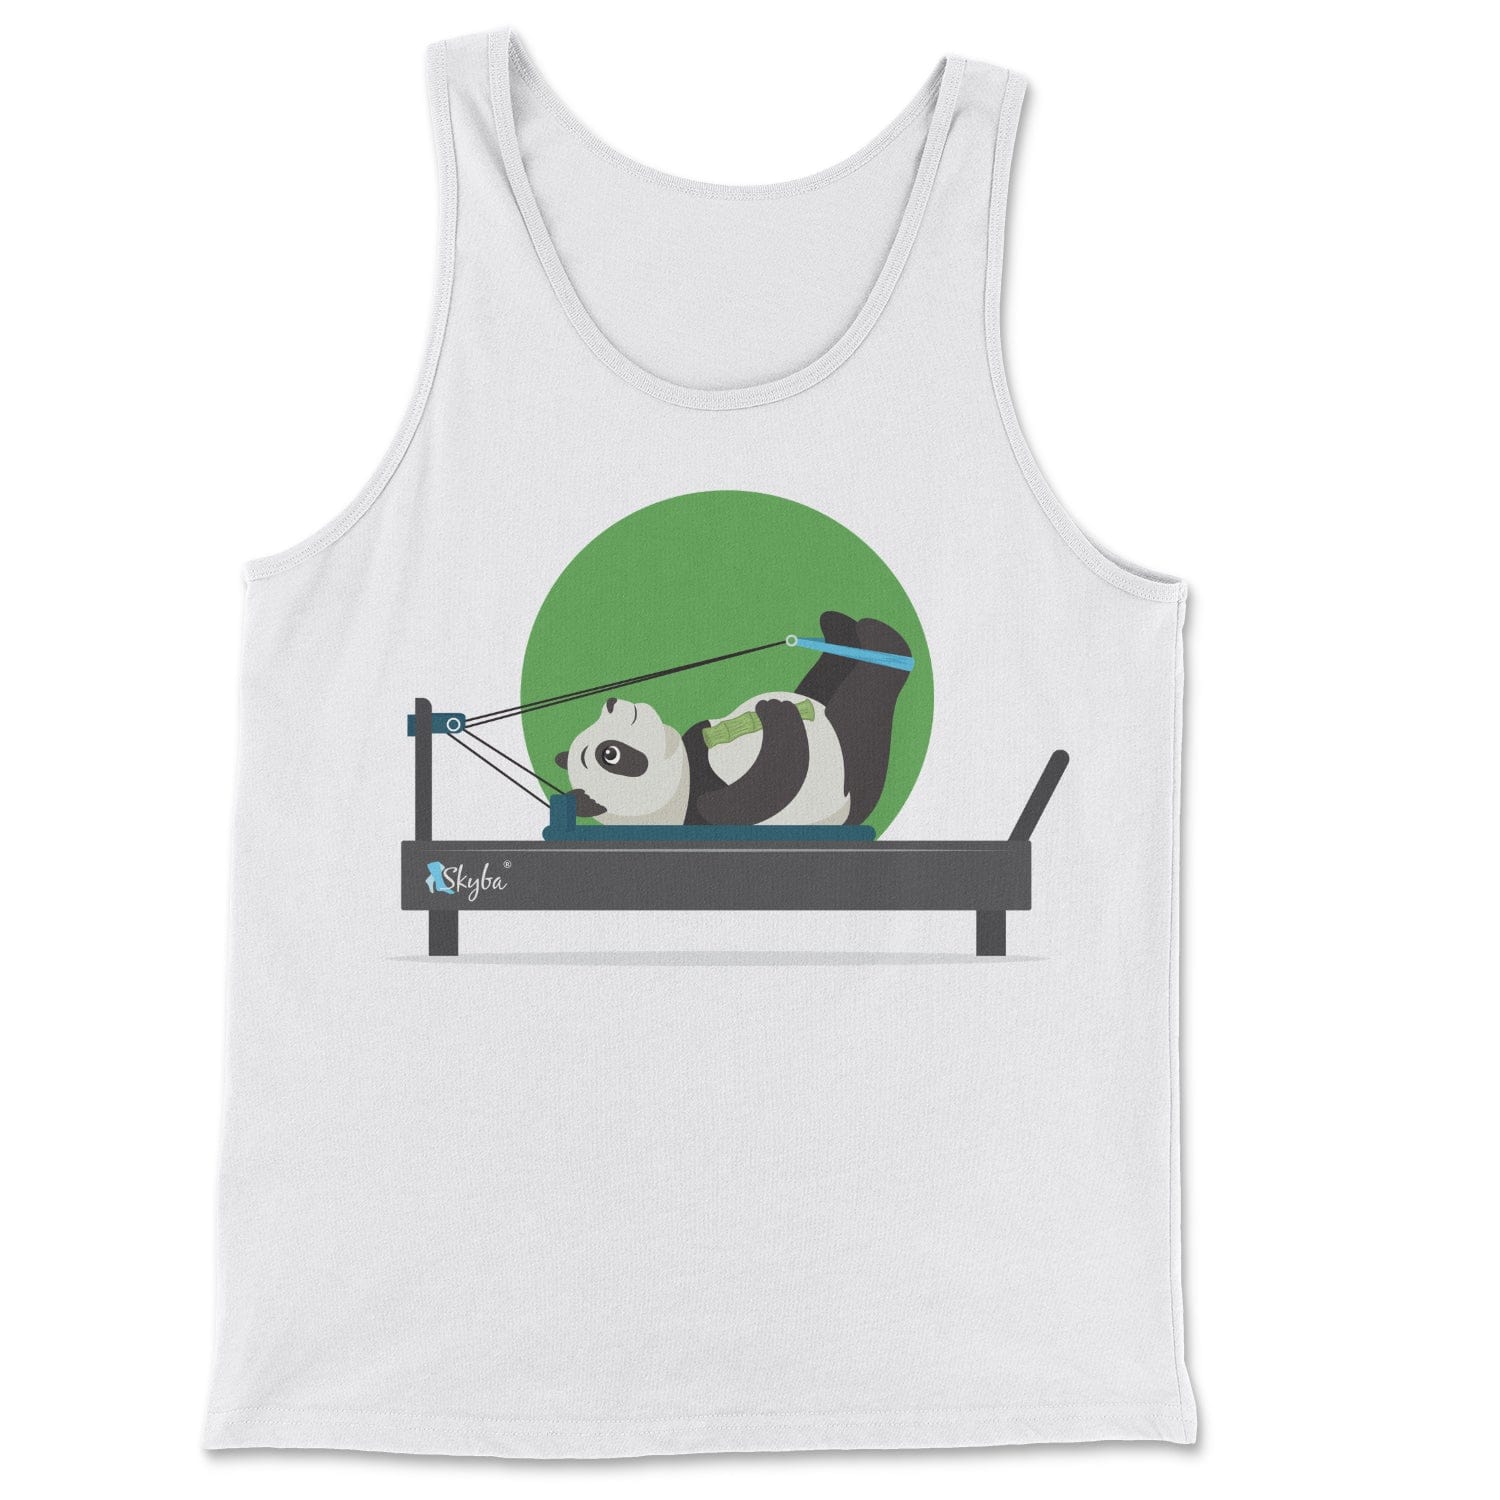 Focused Panda on the Reformer - Classic Tank Skyba Print Material